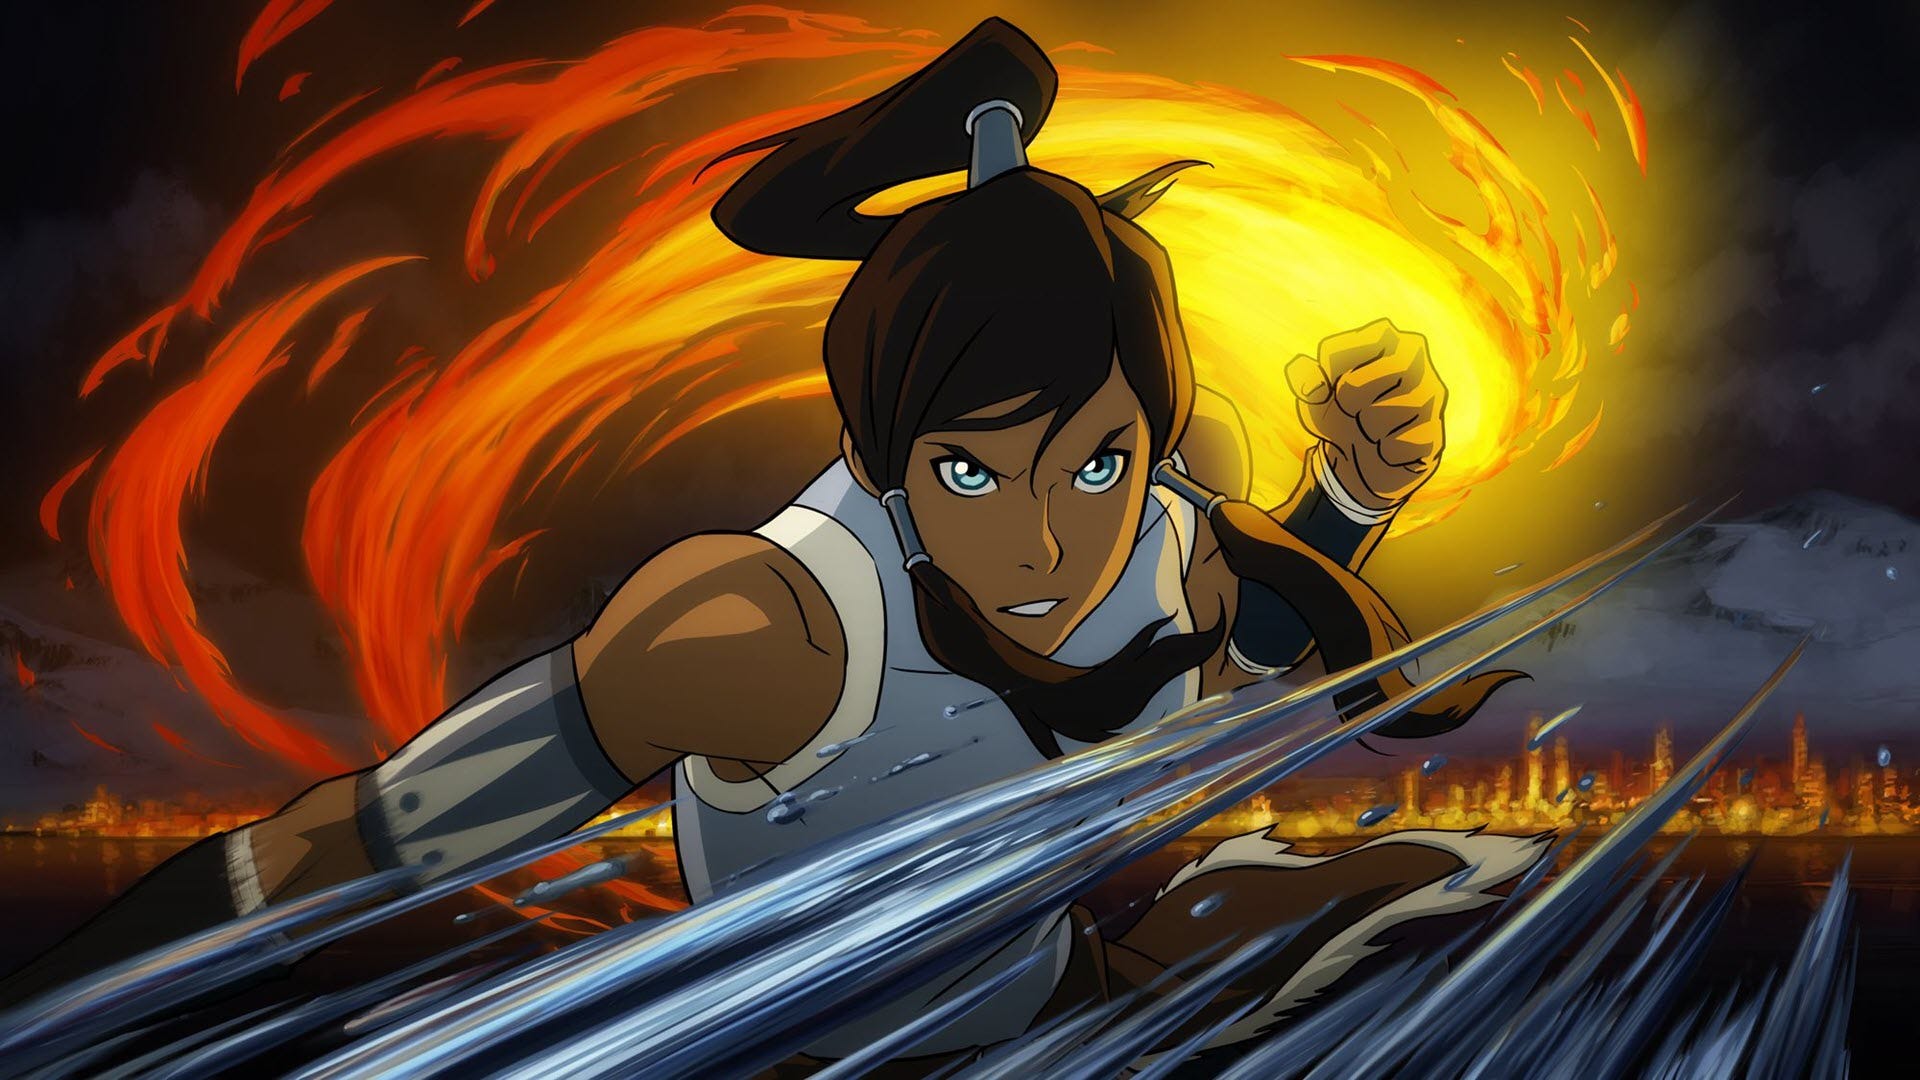 Korra dalam 'The Legend of Korra" membengkokkan api dan air.